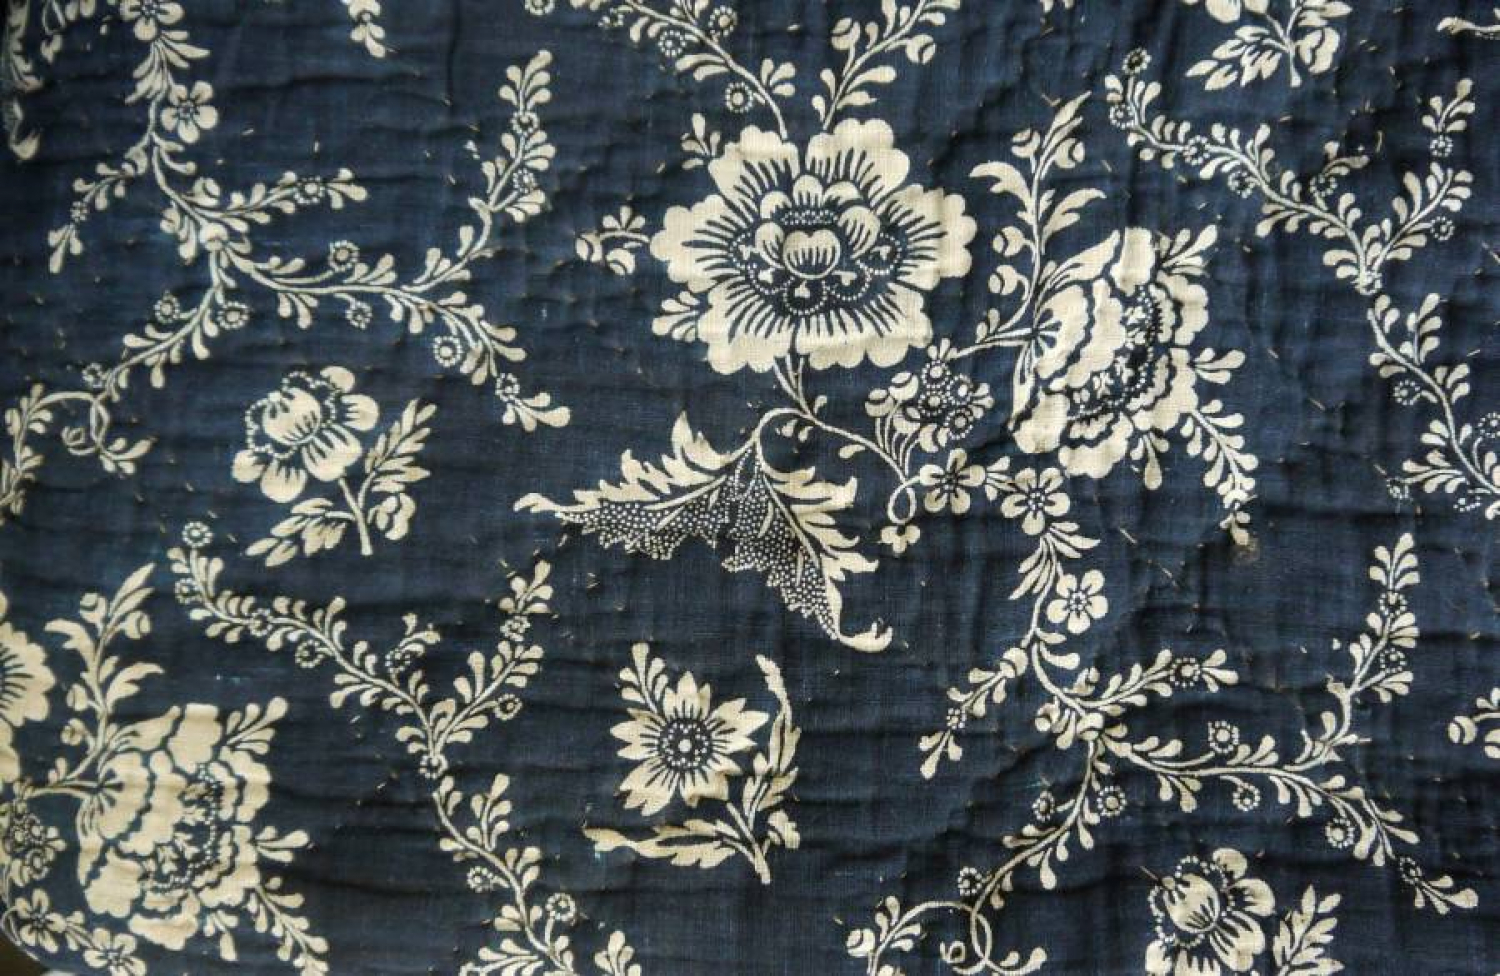 Indigo floral quilt